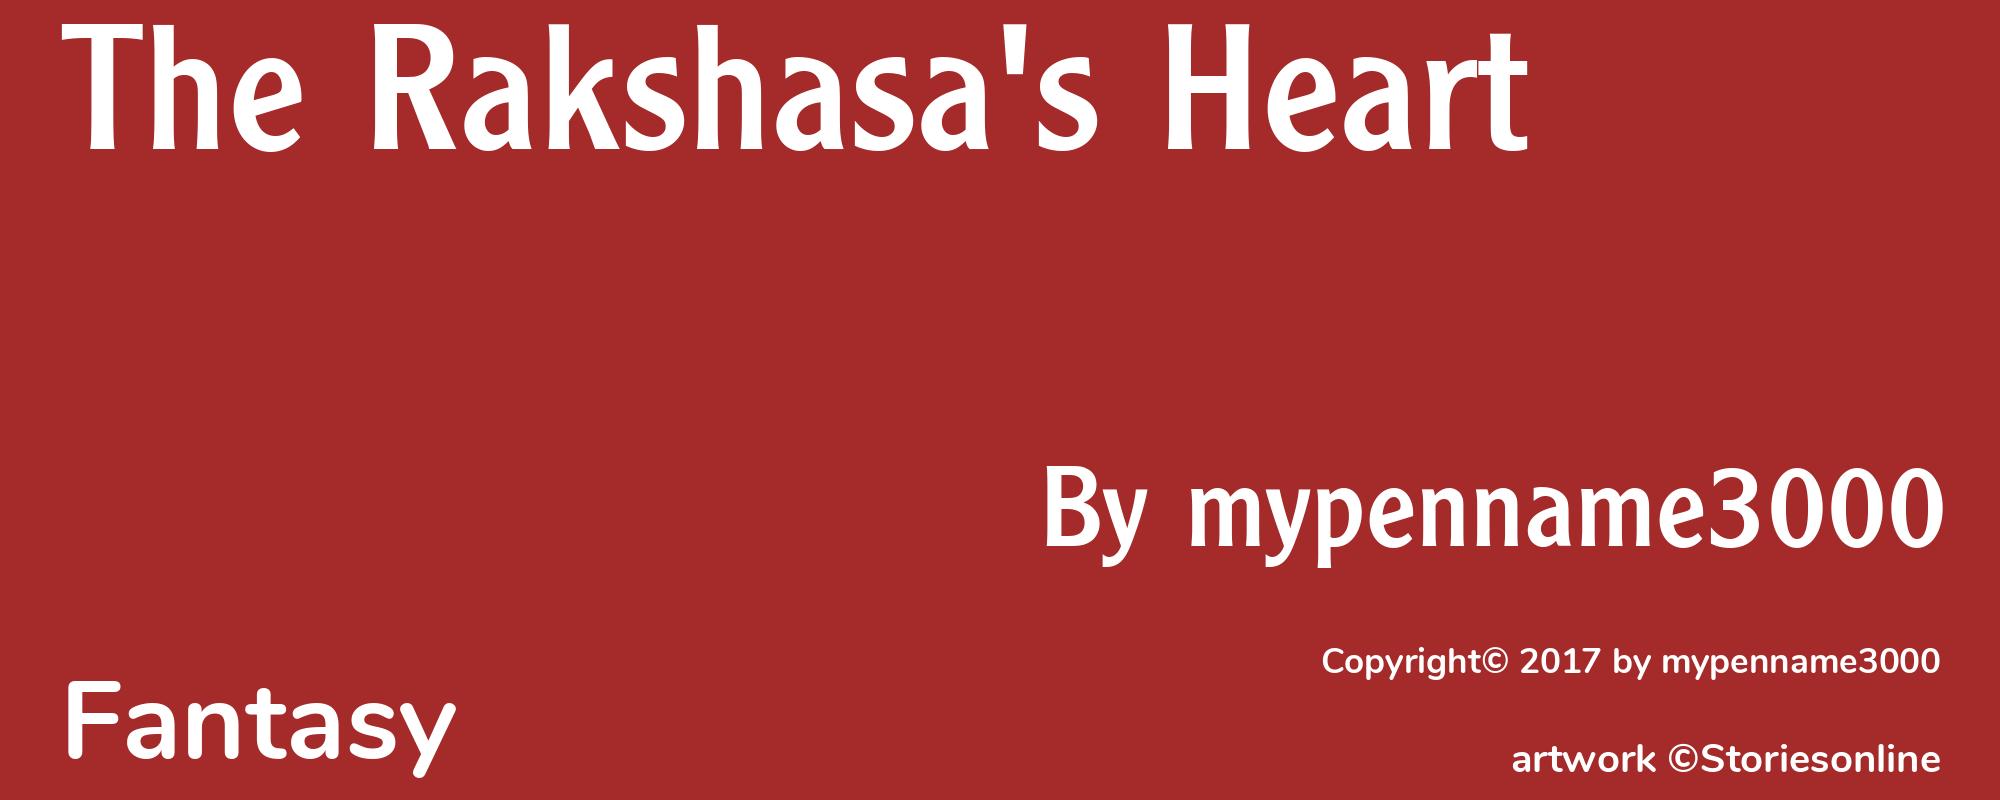 The Rakshasa's Heart - Cover